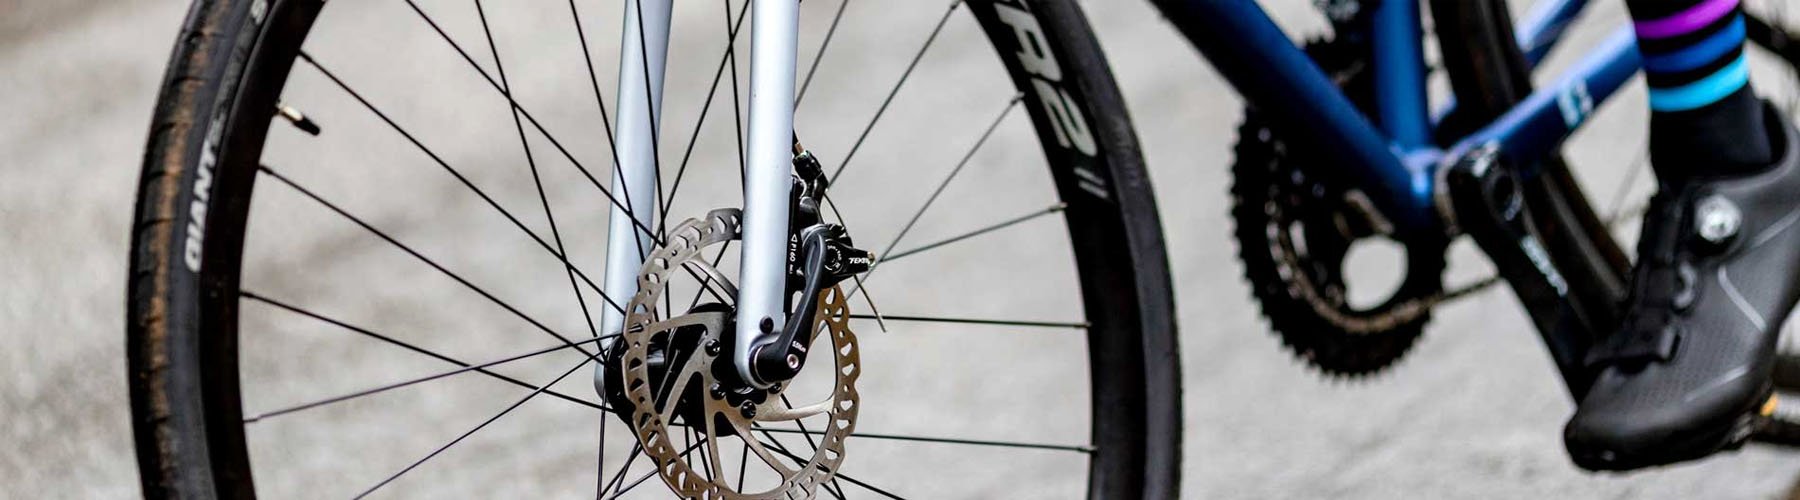 Bike Brakes | Shop Bicycle Brake Pads, Rotors and Cables